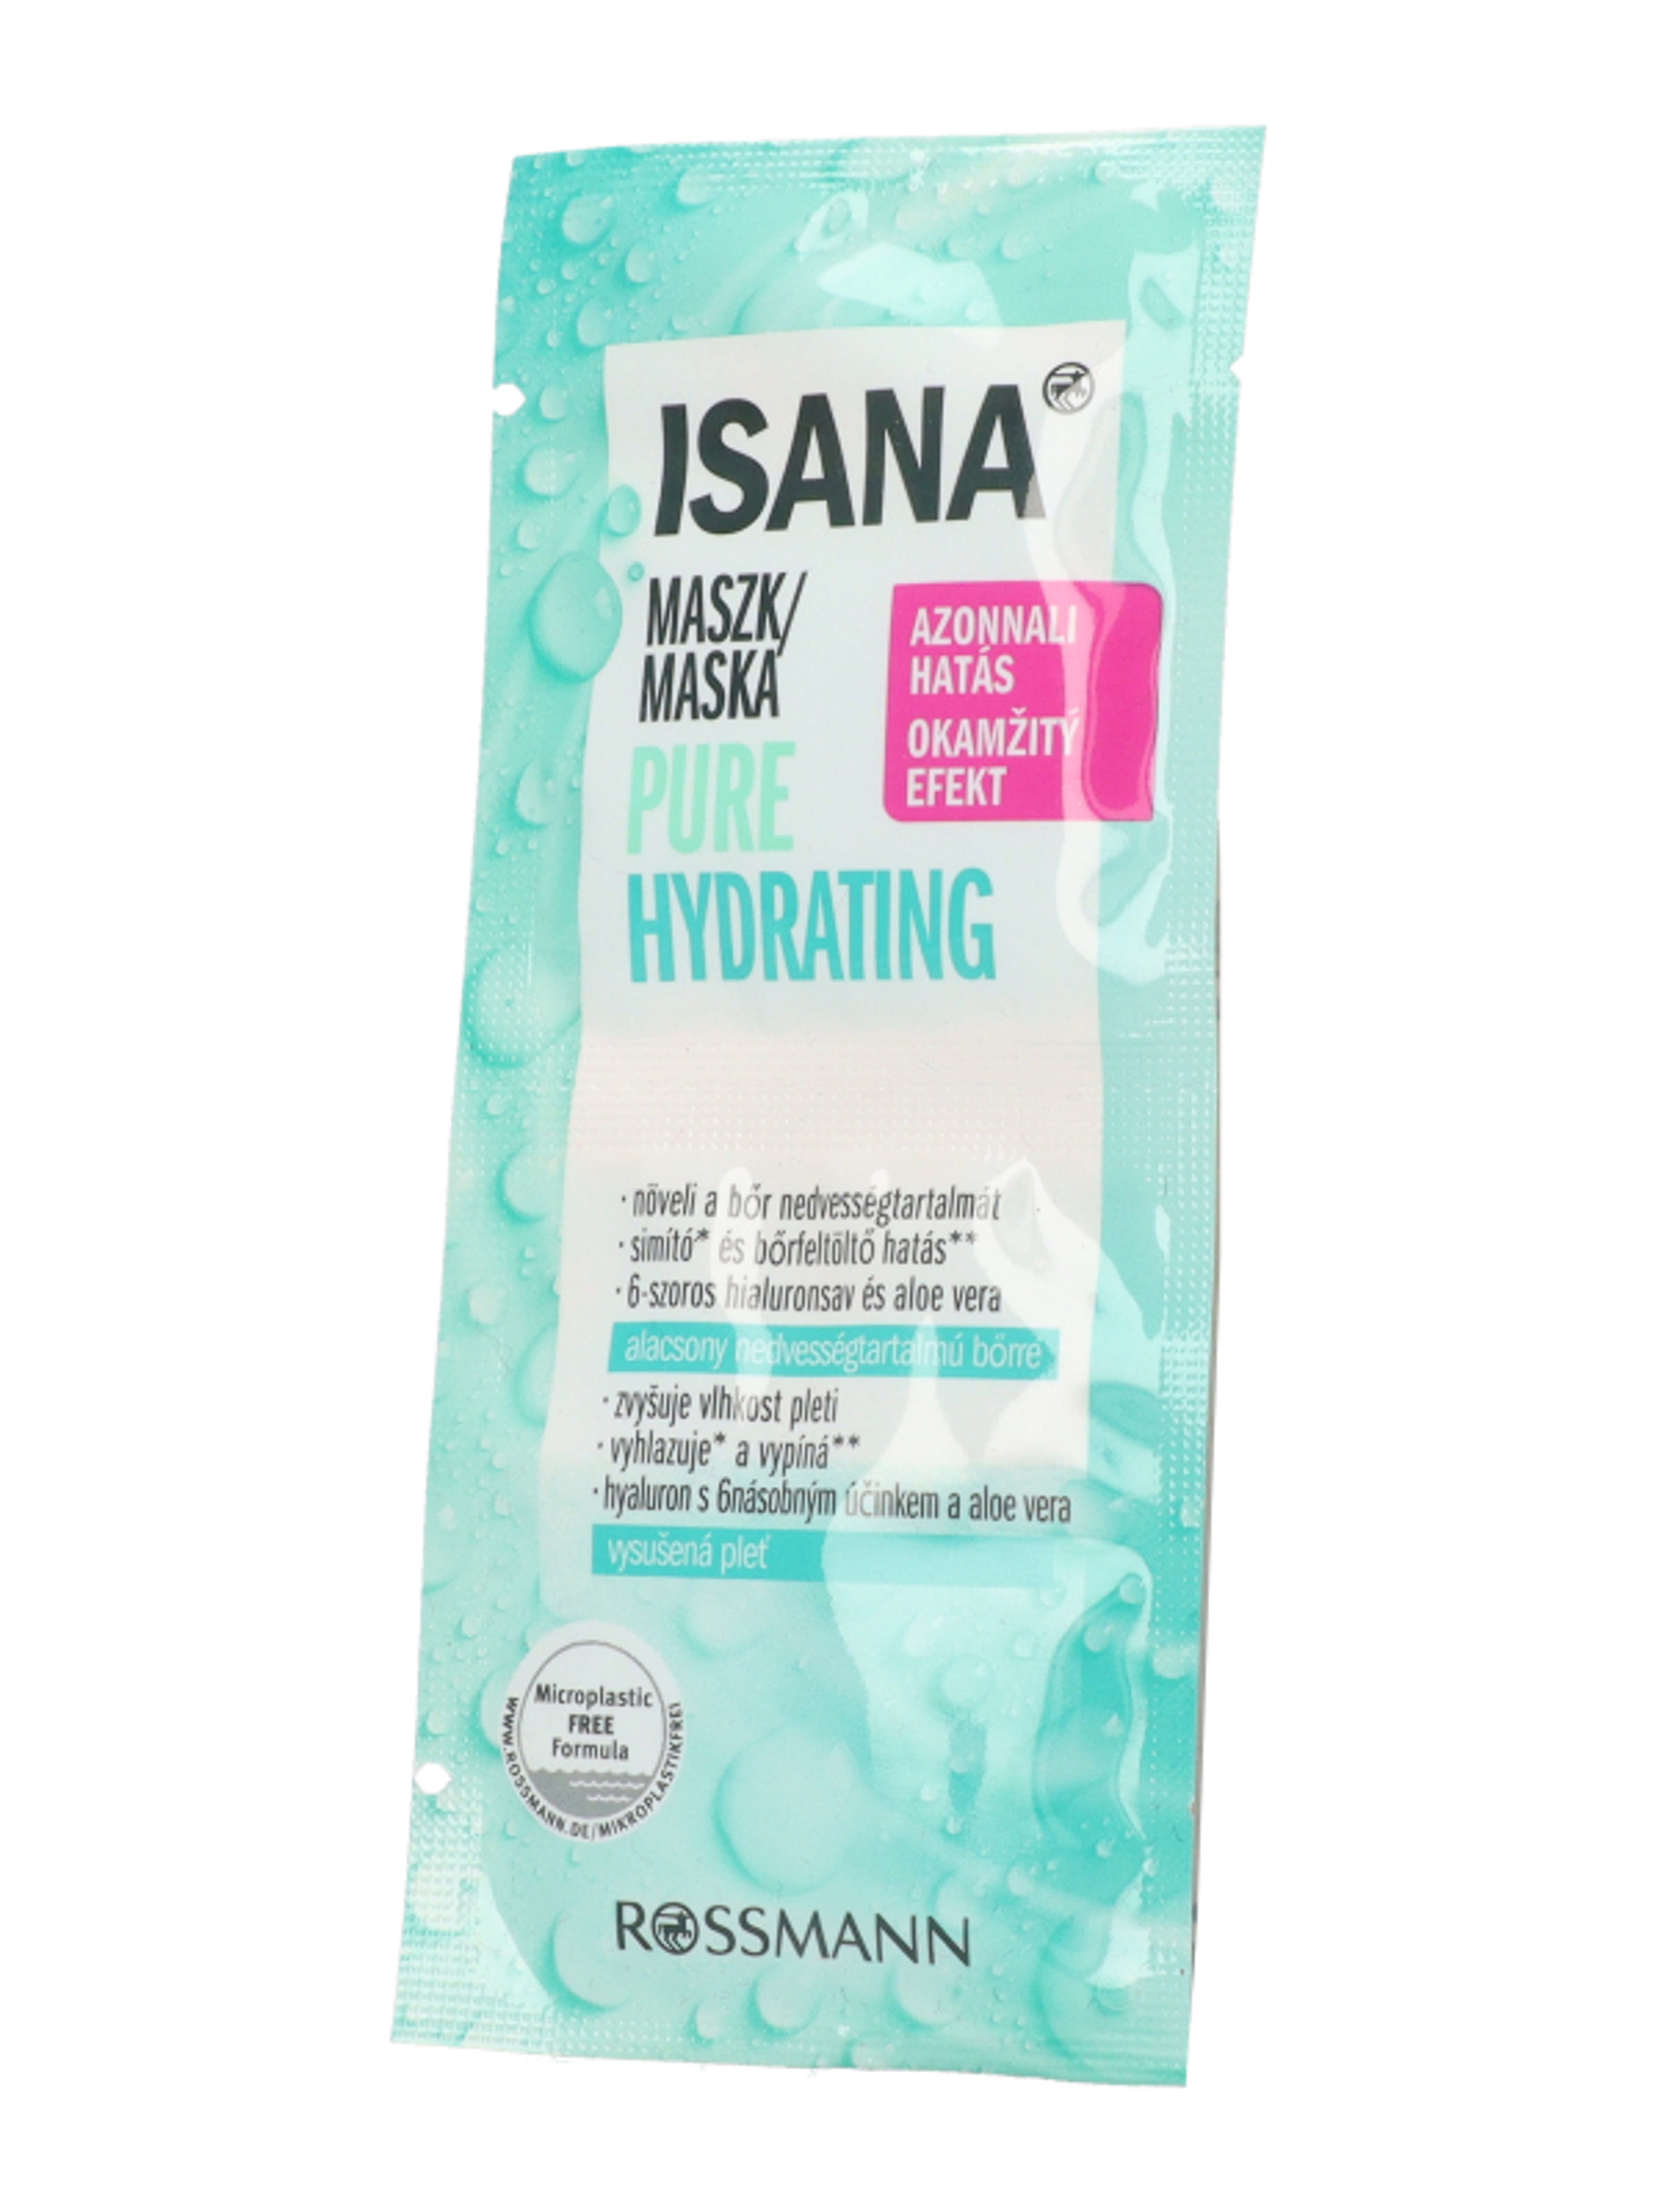 Isana Pure Hydrating maszk 2x8 ml - 16 ml-3